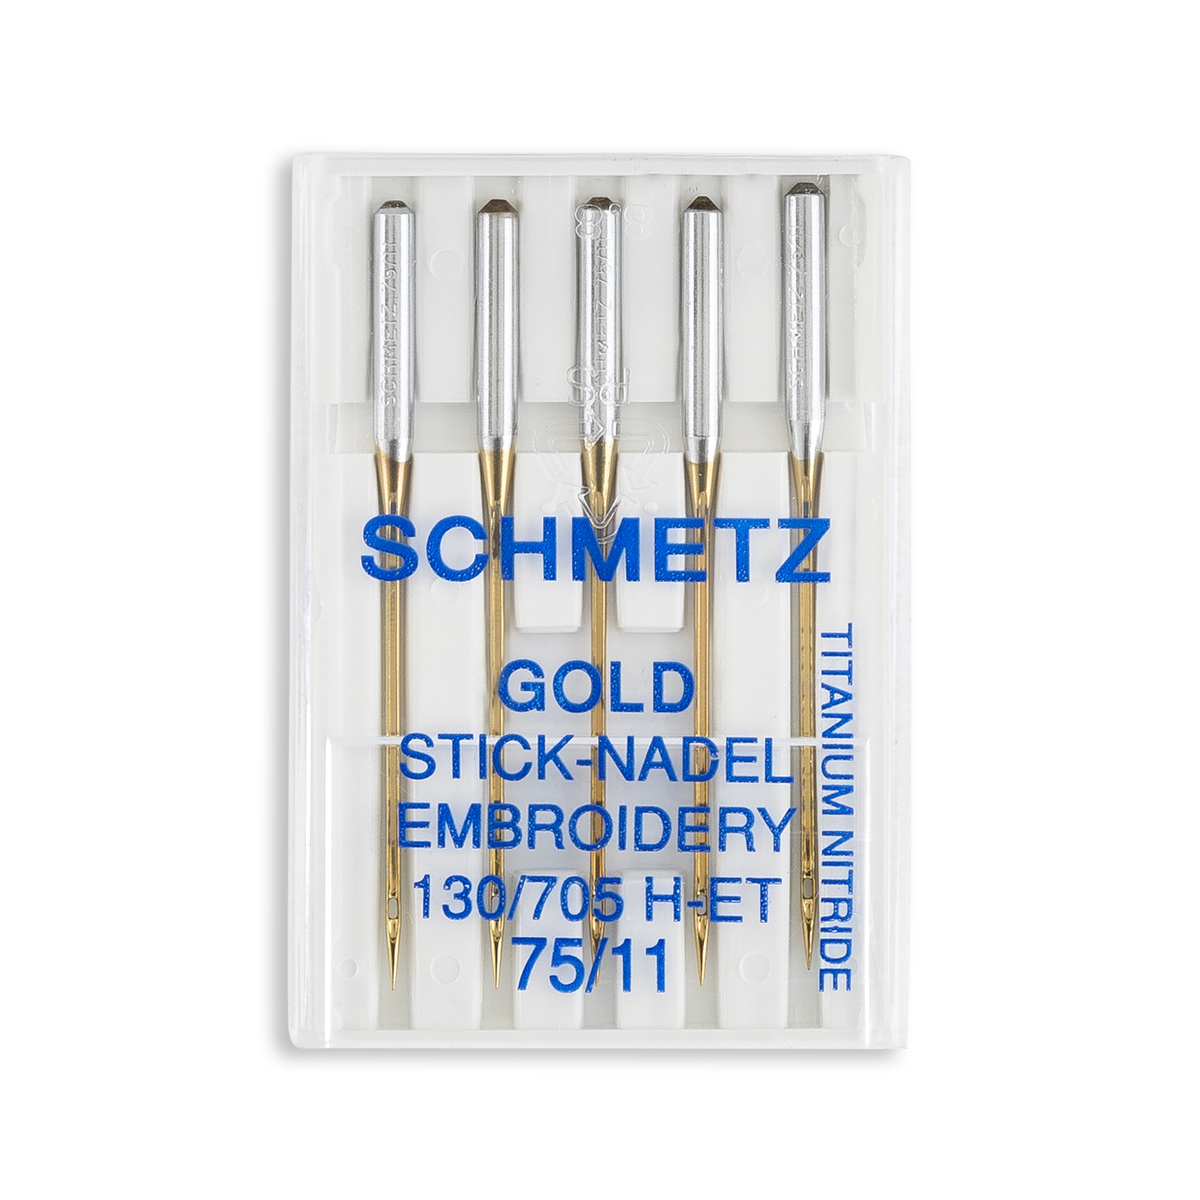 Schmetz Universal Needles - 15x1, 130/705 H - 5/Pack - Cleaner's Supply